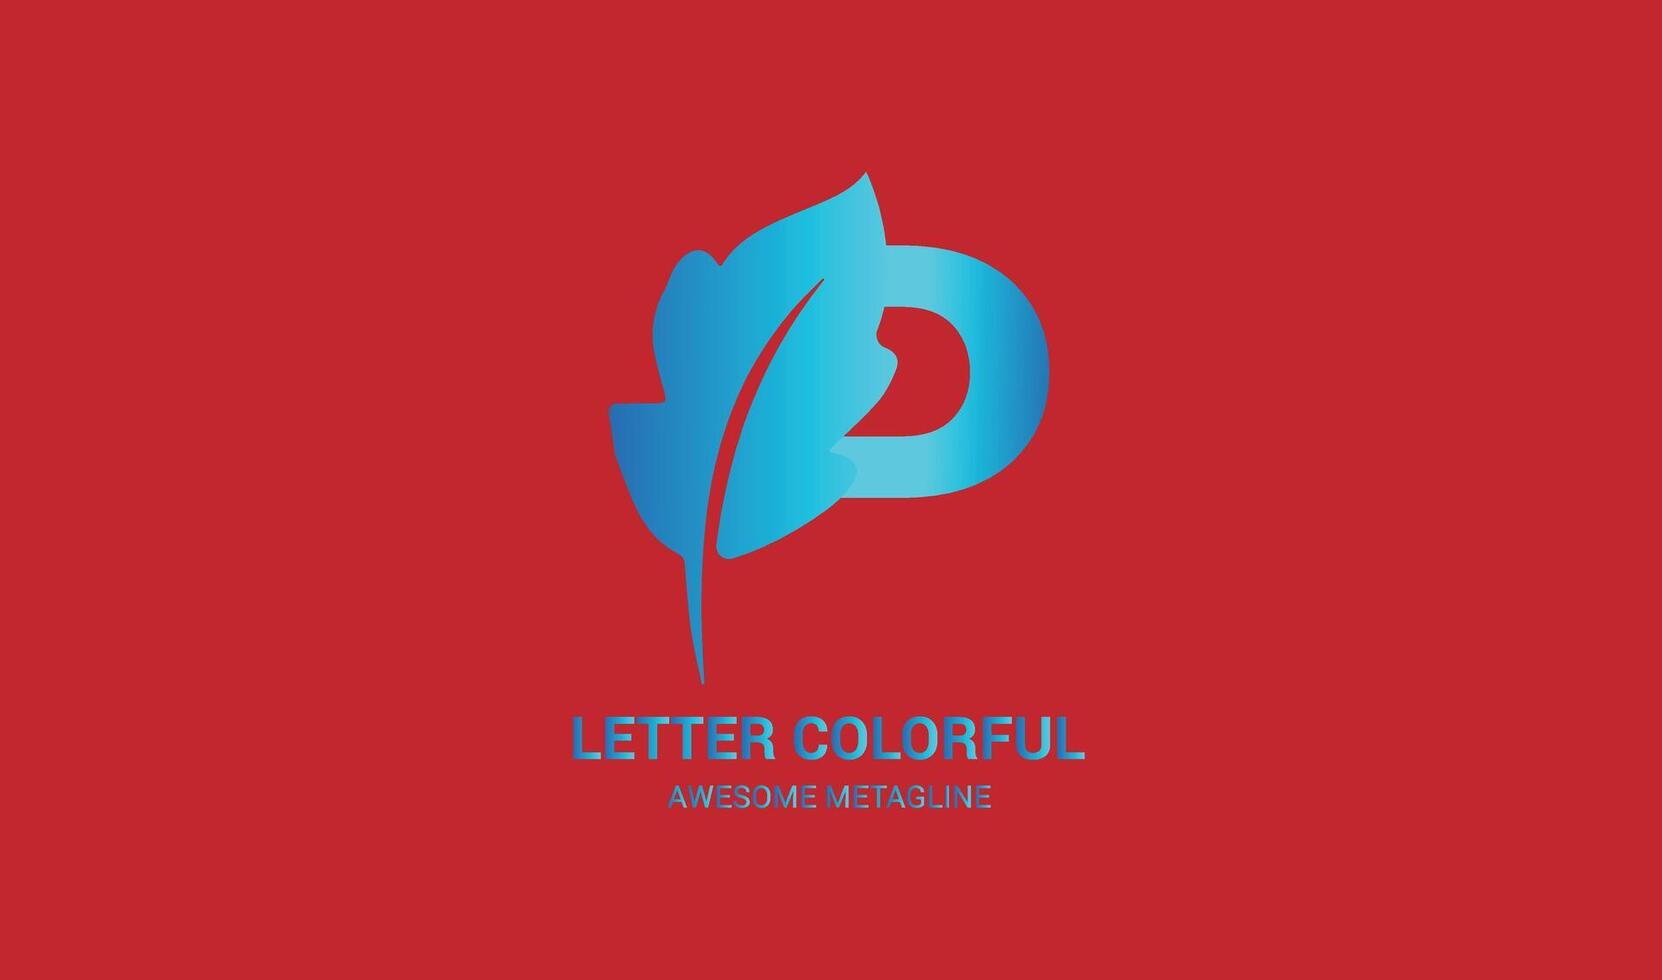 letztere p Logo Vorlage Vektor abstrakt Monogramm Symbol